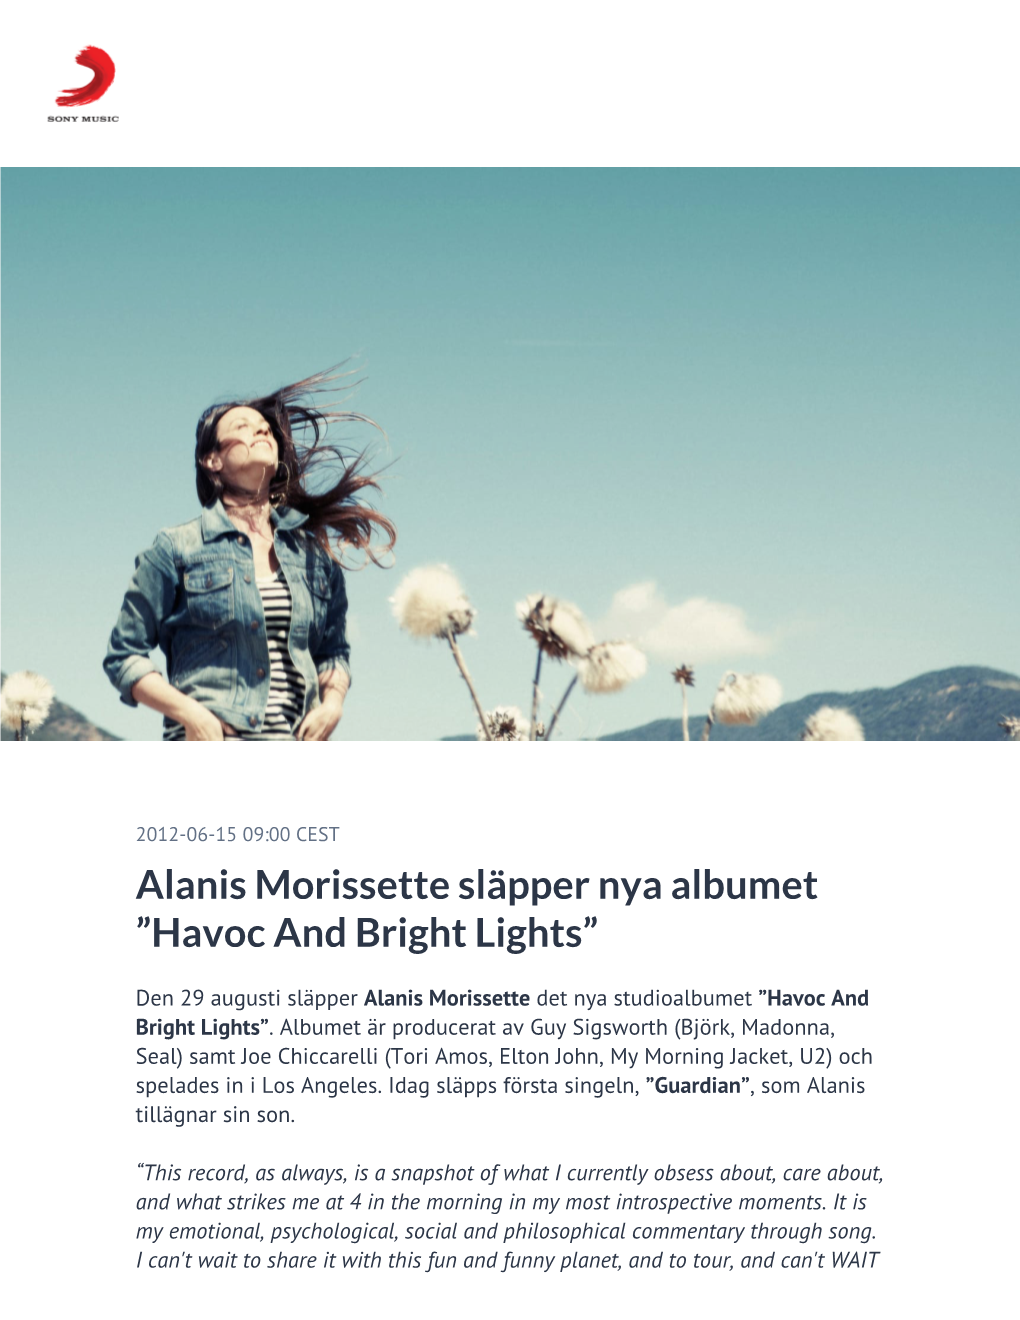 Havoc and Bright Lights”